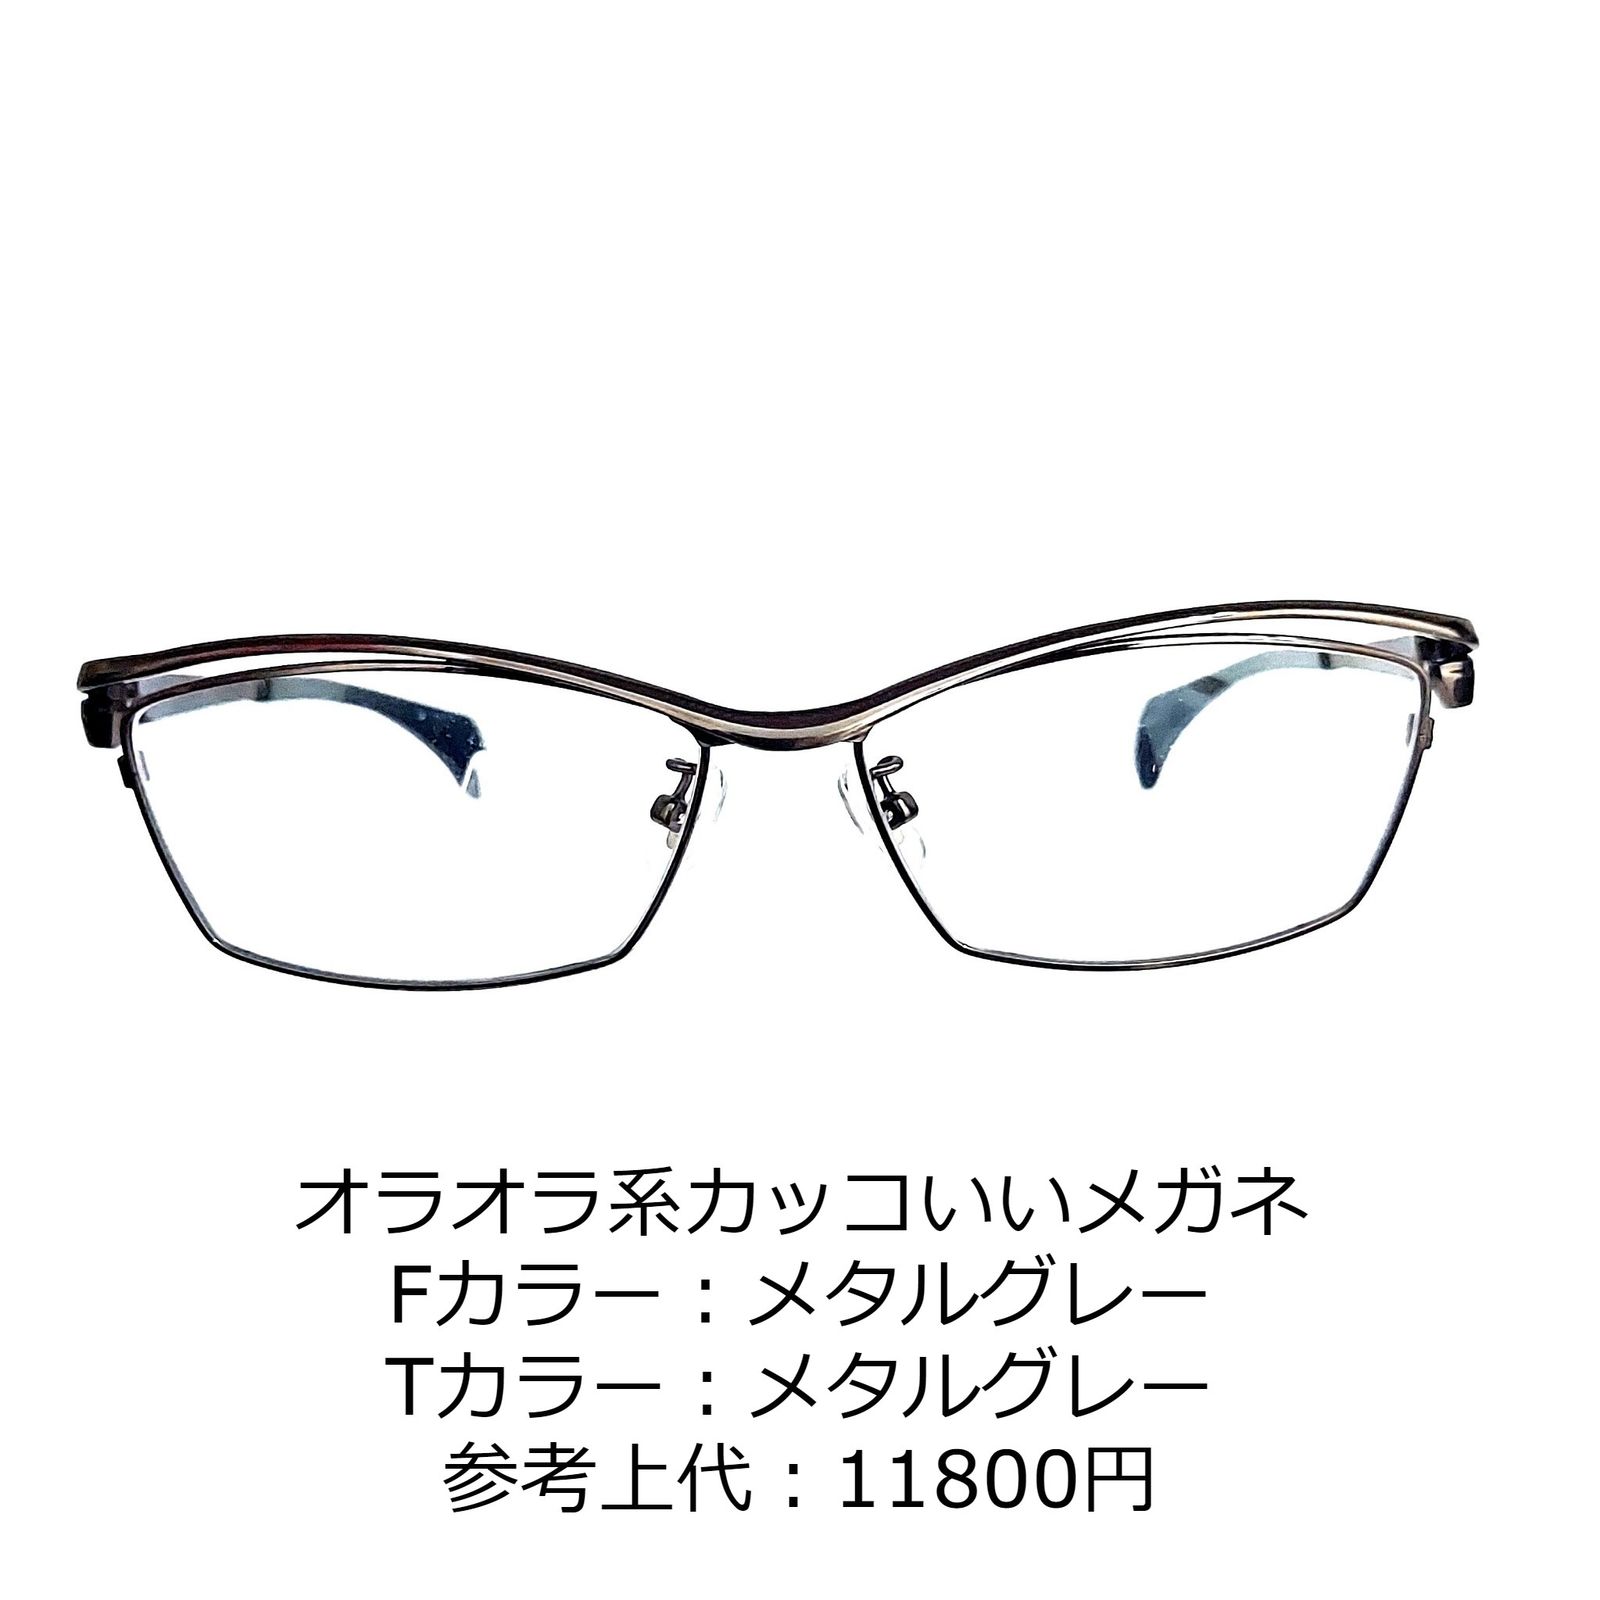 No.1225+メガネ オラオラ系カッコいい+メガネ【度数入り込み価格